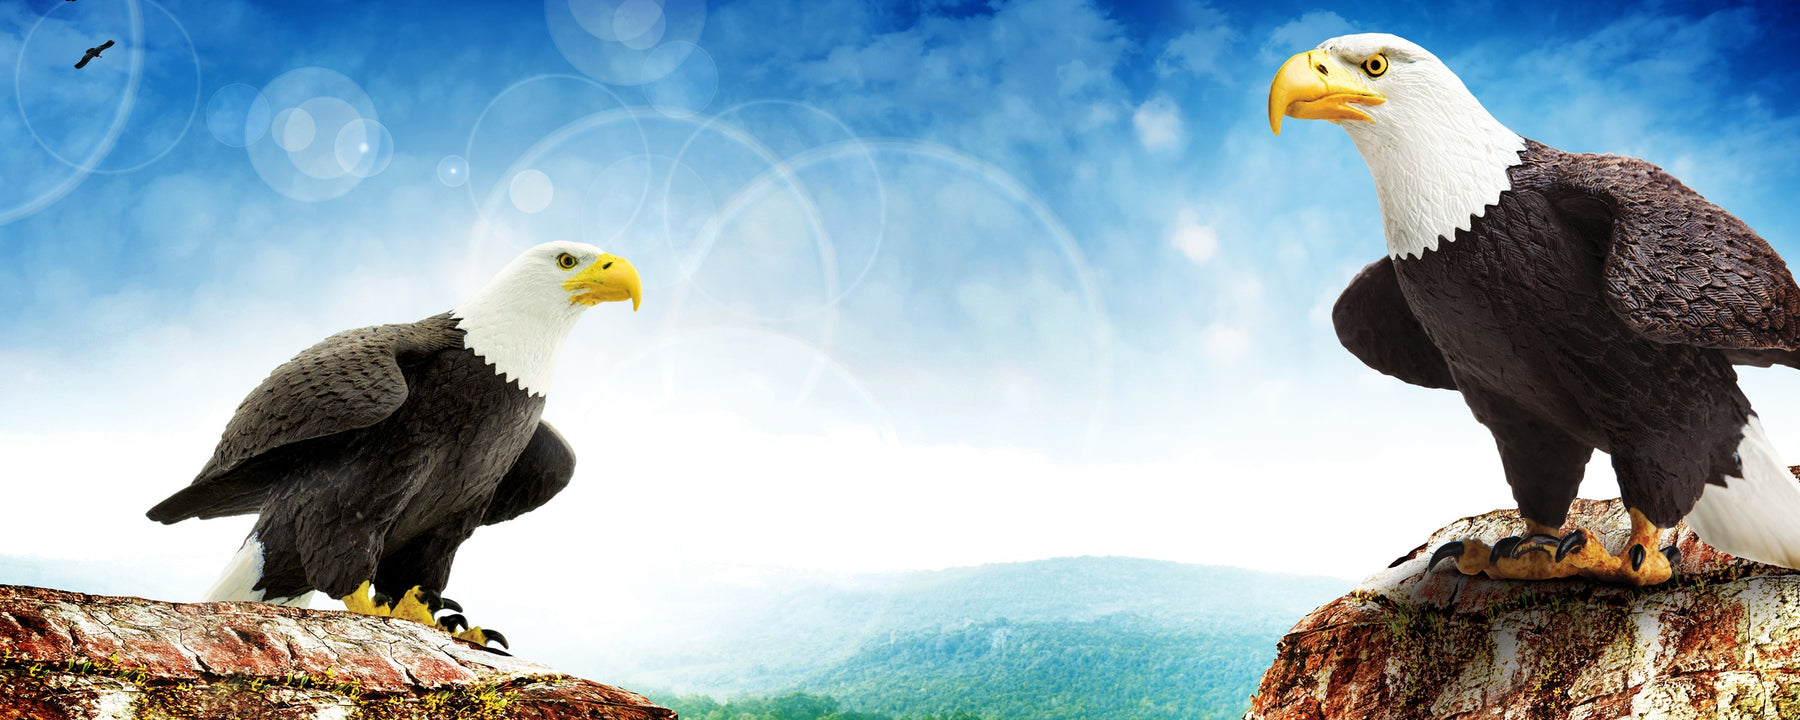 Flying High for American Eagle Day! - Safari Ltd®